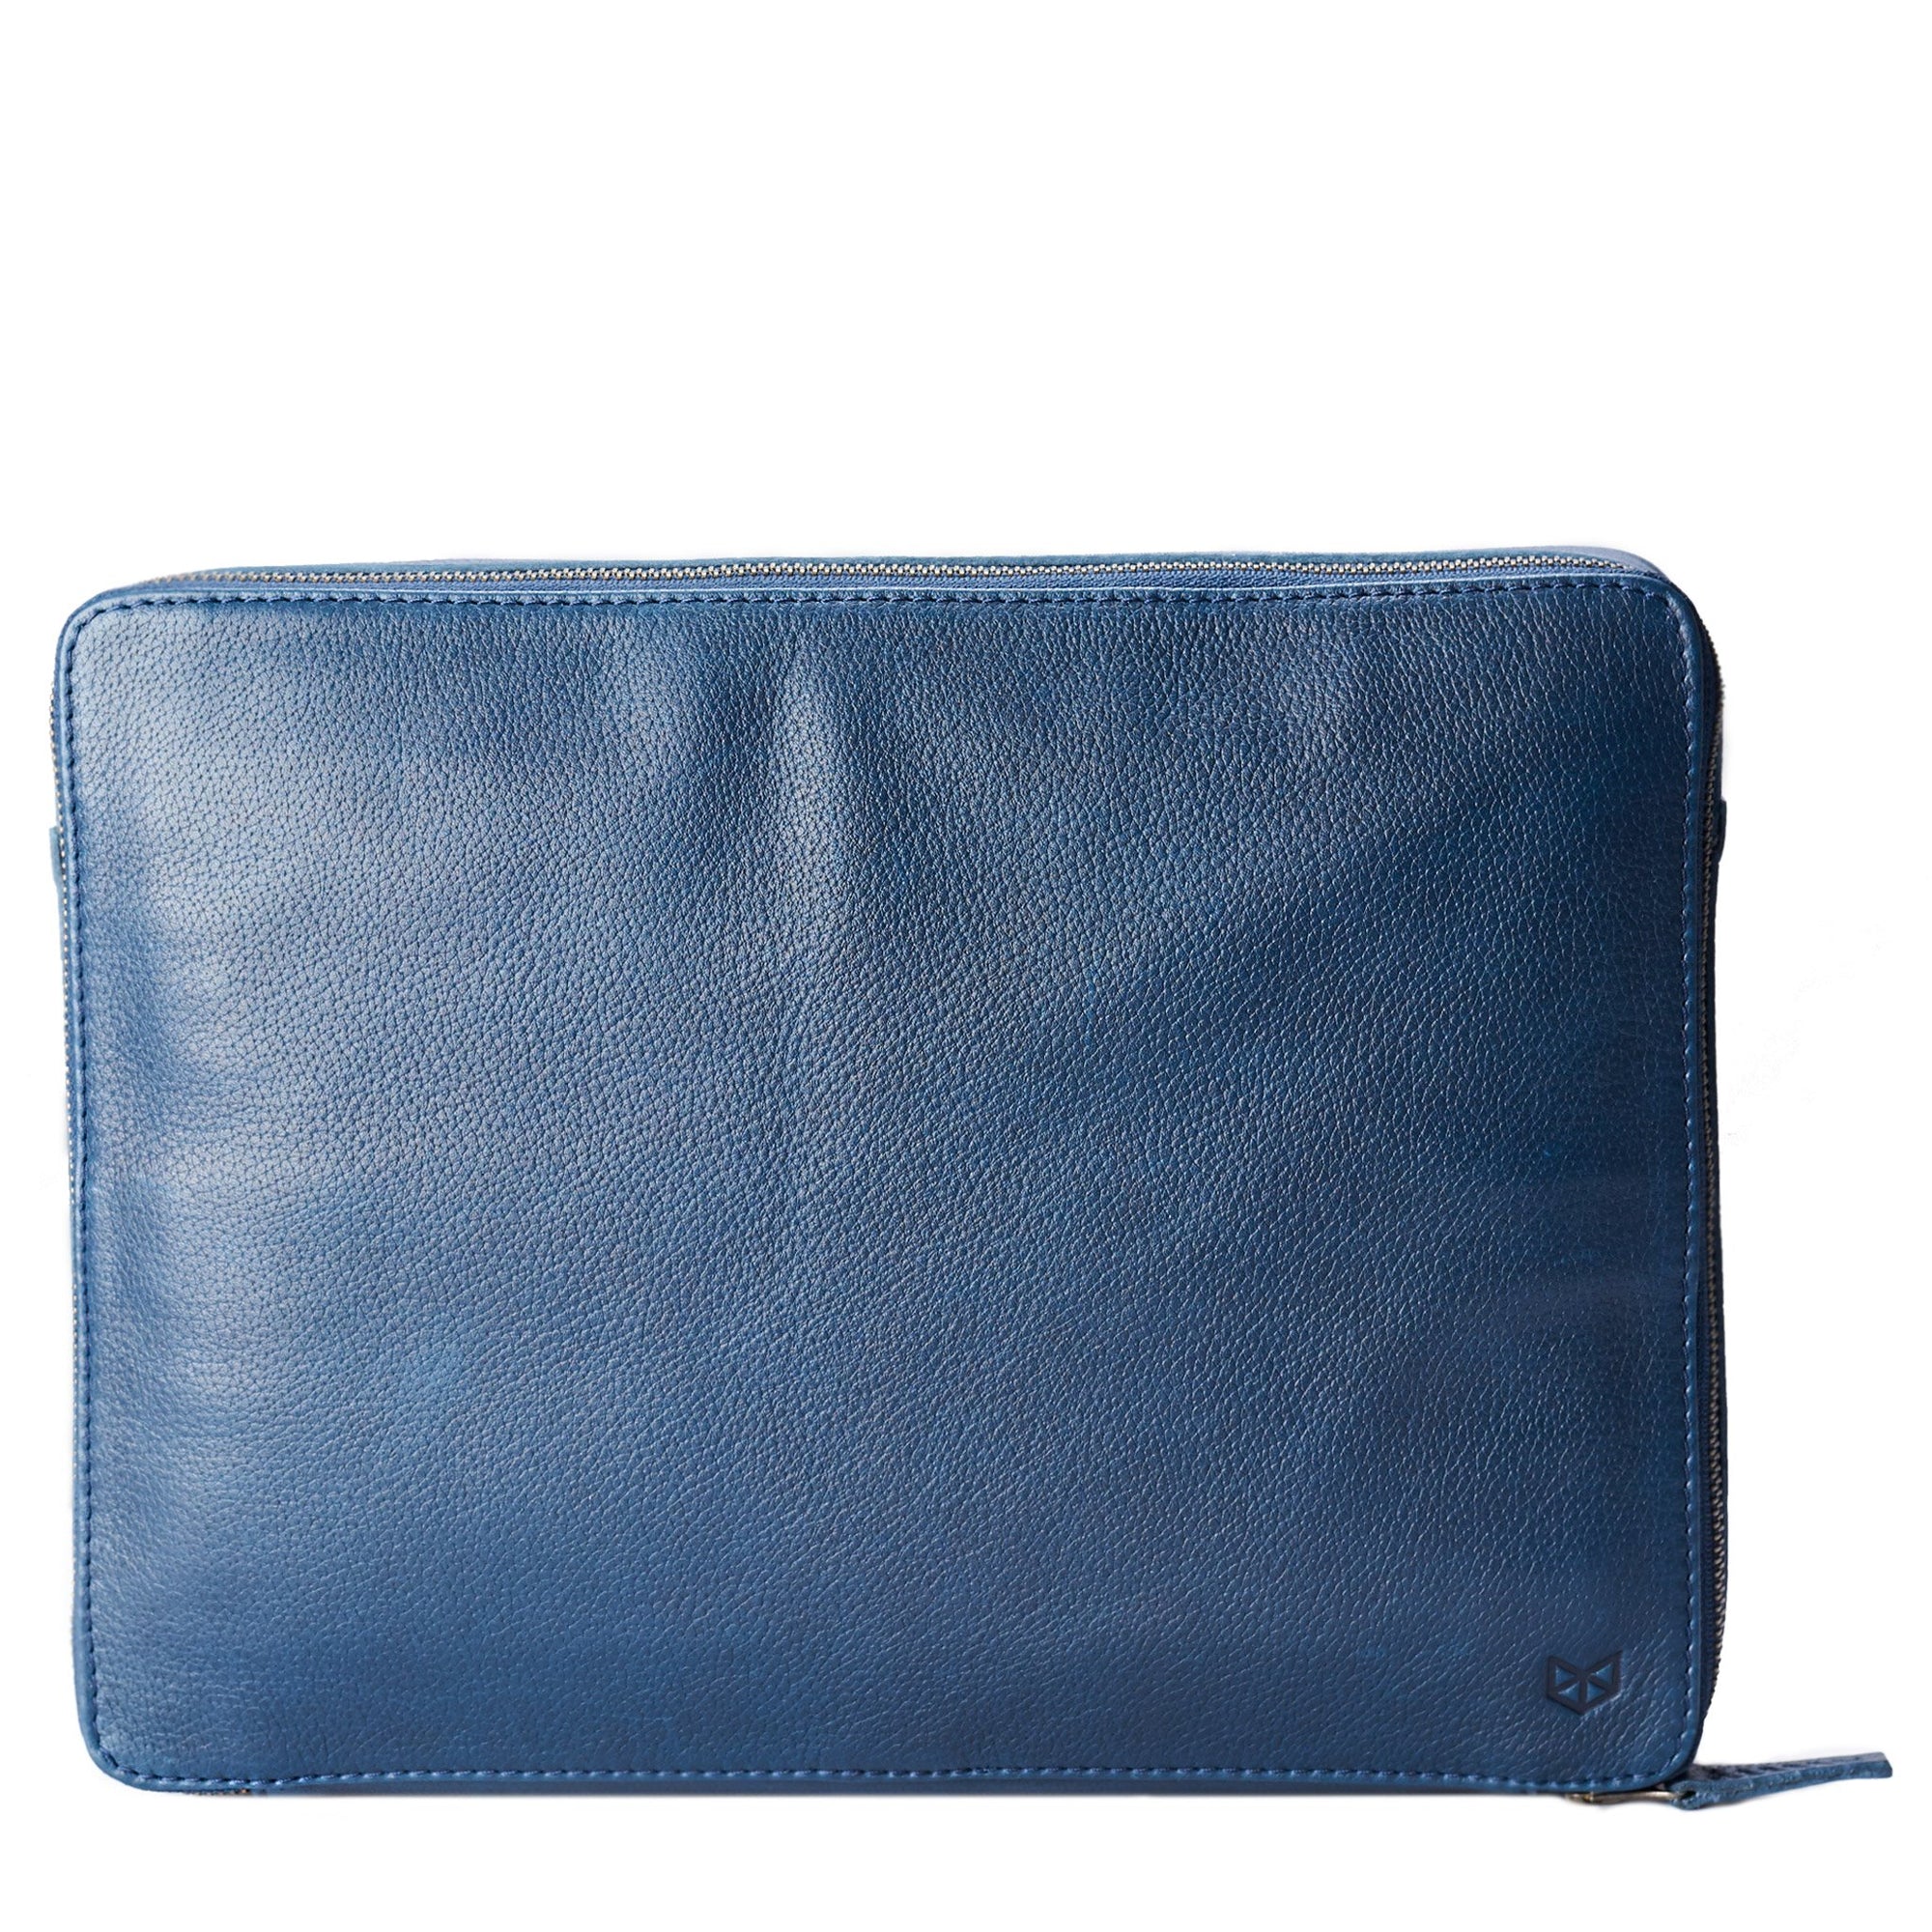 Navy blue EDC bag. Handmade tech accessory organizer by Capra Leather